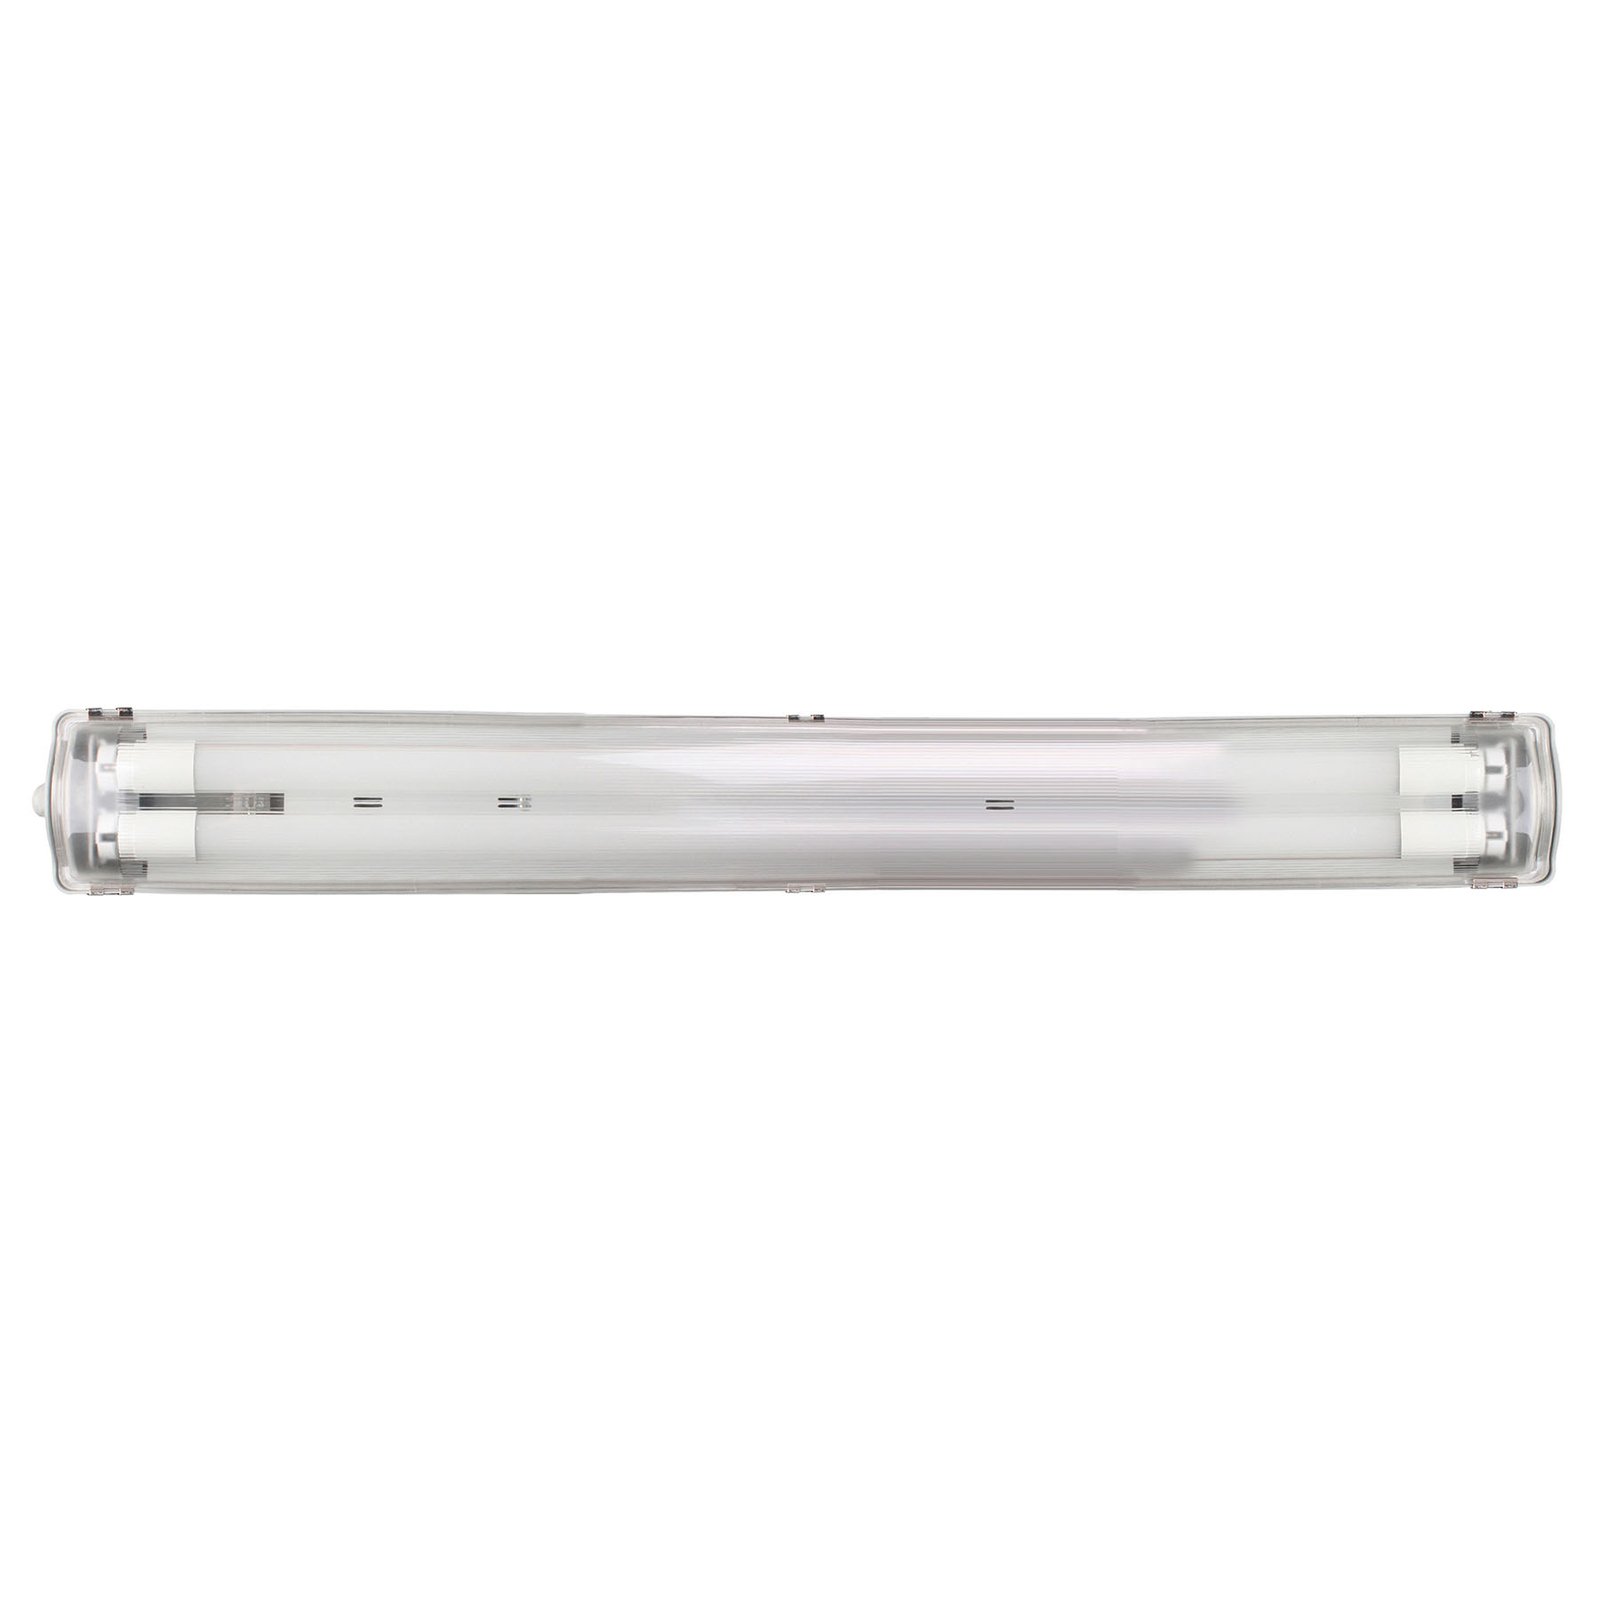 Aqua-Promo 2/60 LED moisture-proof light, 66.8 cm